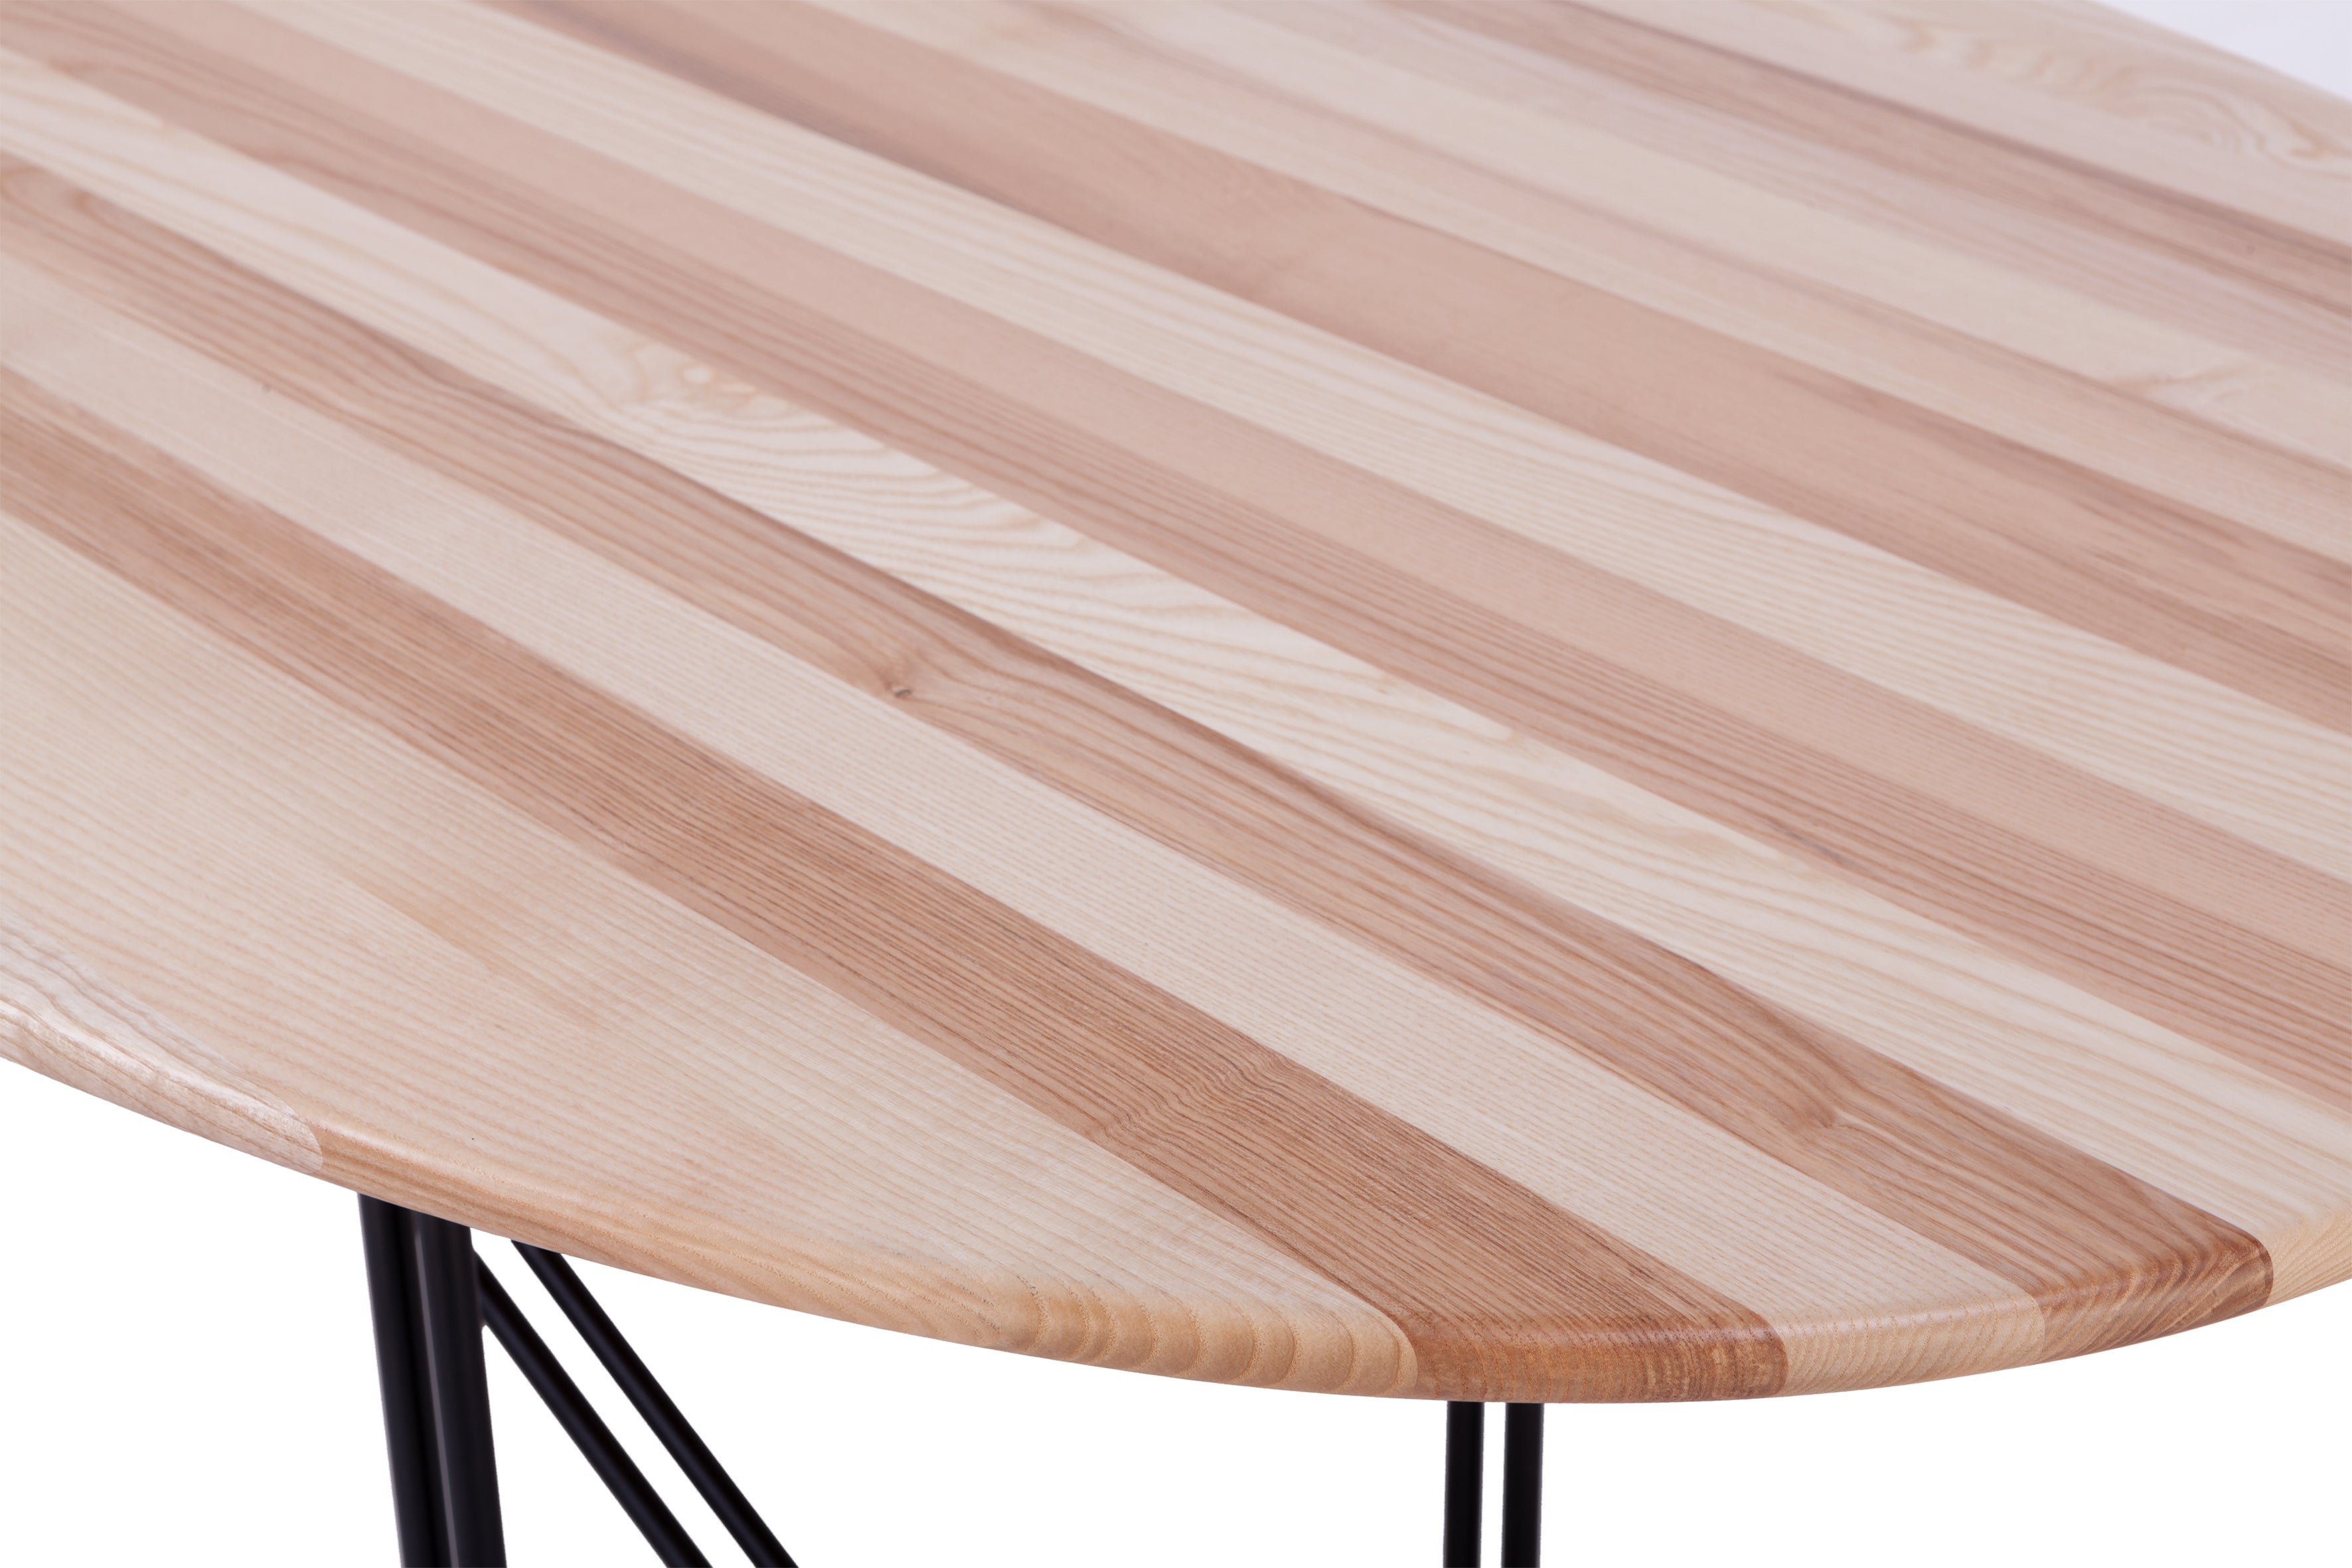 ARNES table ash wood